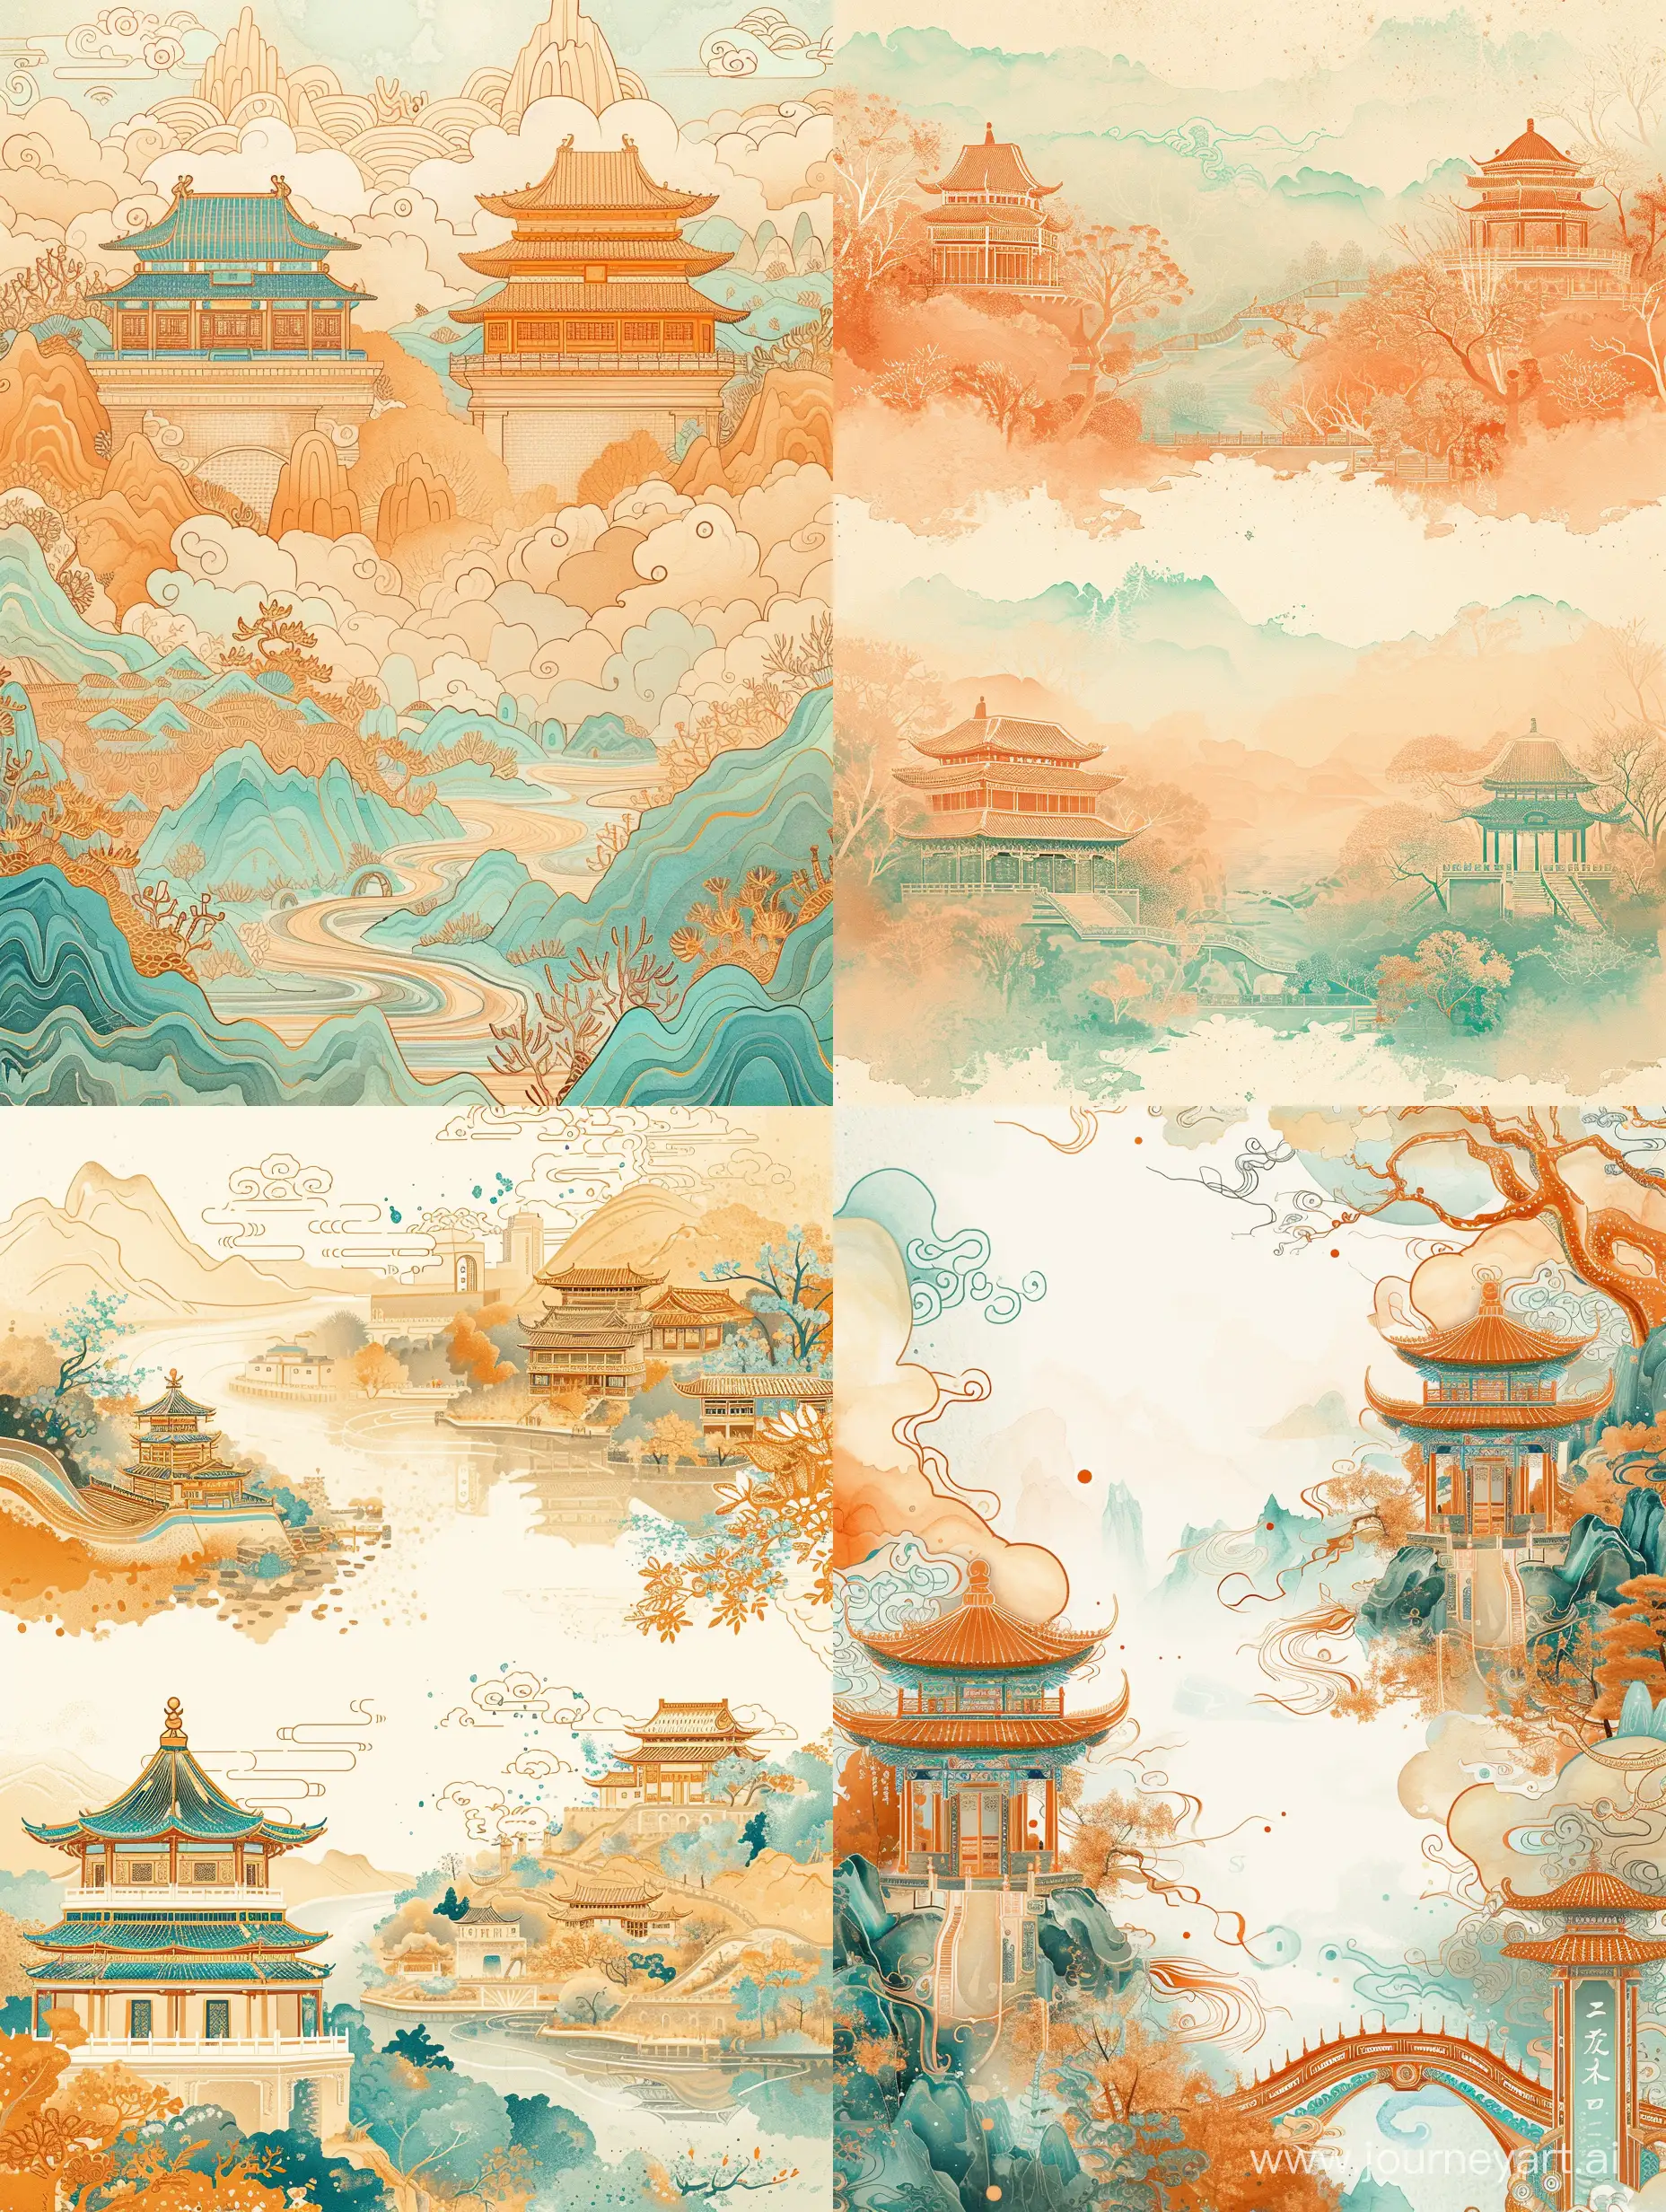 Ancient-Chinese-Civilization-Ornamental-Landscape-in-Delicate-Watercolor-Style